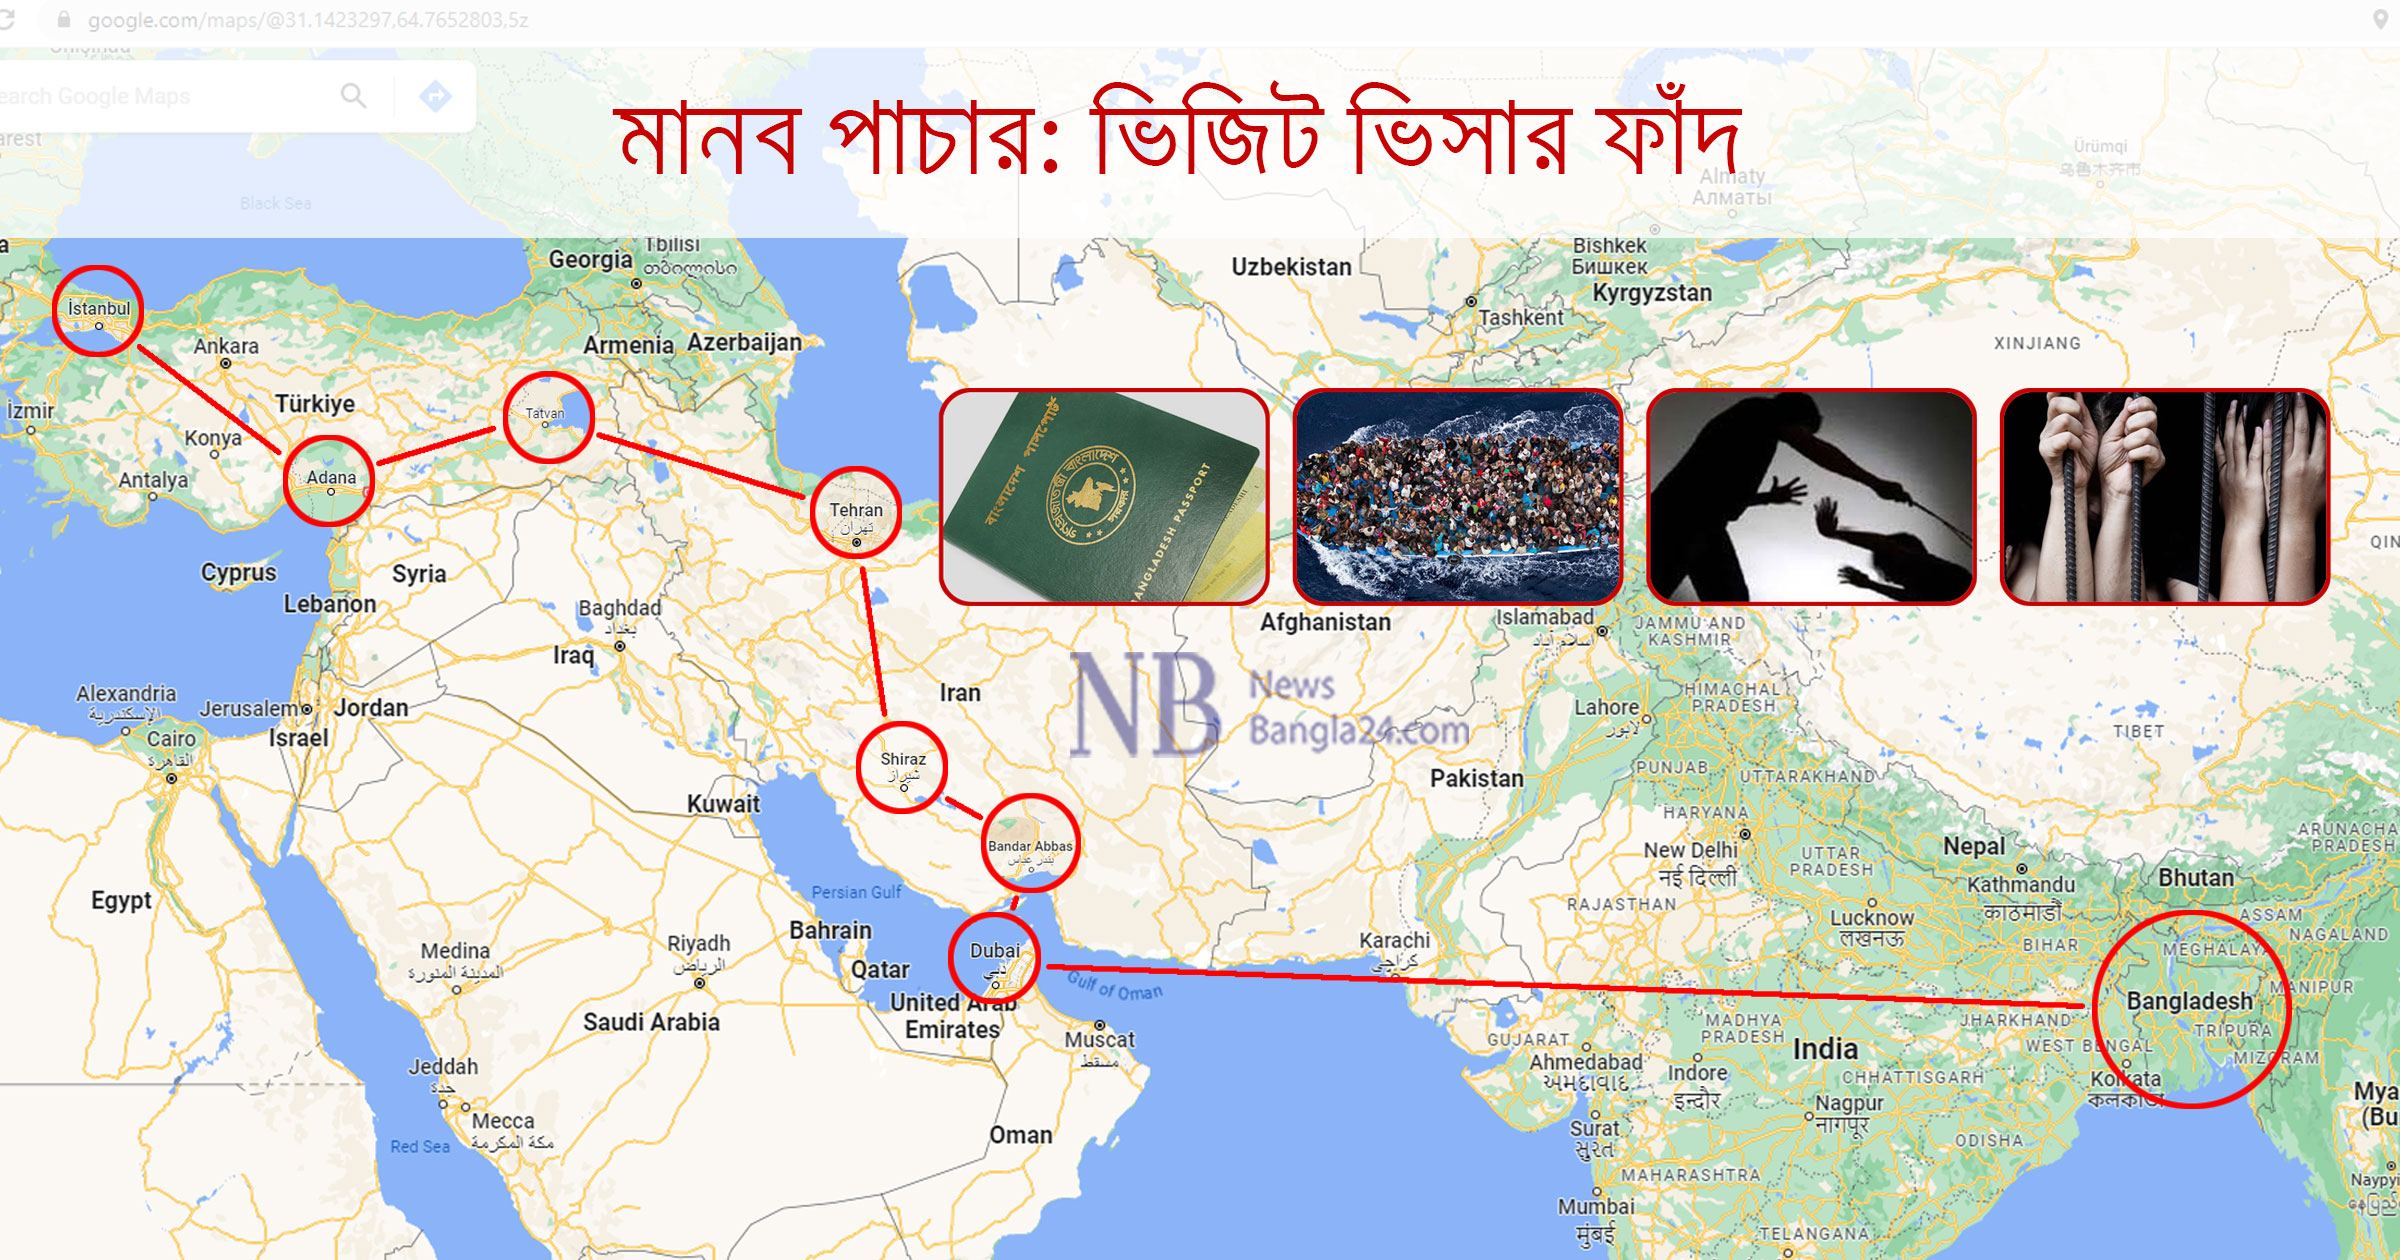 2-lakh-Bangladeshis-in-Dubai-aim-for-Europe-on-visit-visa